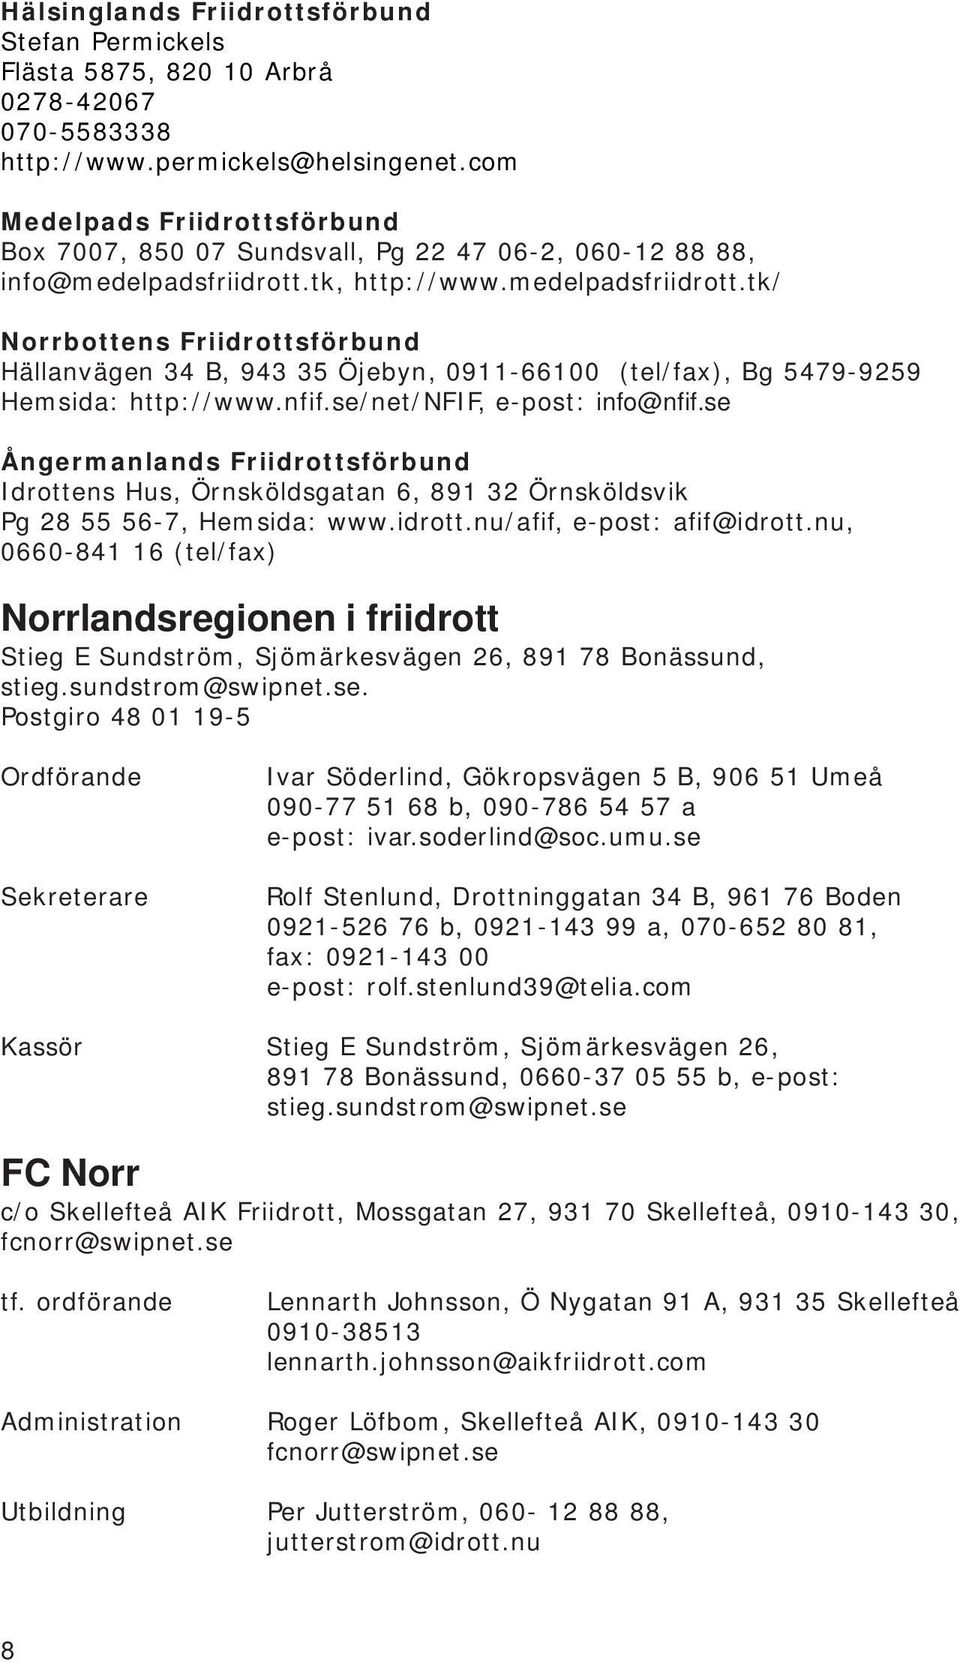 tk, http://www.medelpadsfriidrott.tk/ Norrbottens Friidrottsförbund Hällanvägen 34 B, 943 35 Öjebyn, 0911-66100 (tel/fax), Bg 5479-9259 Hemsida: http://www.nfif.se/net/nfif, e-post: info@nfif.